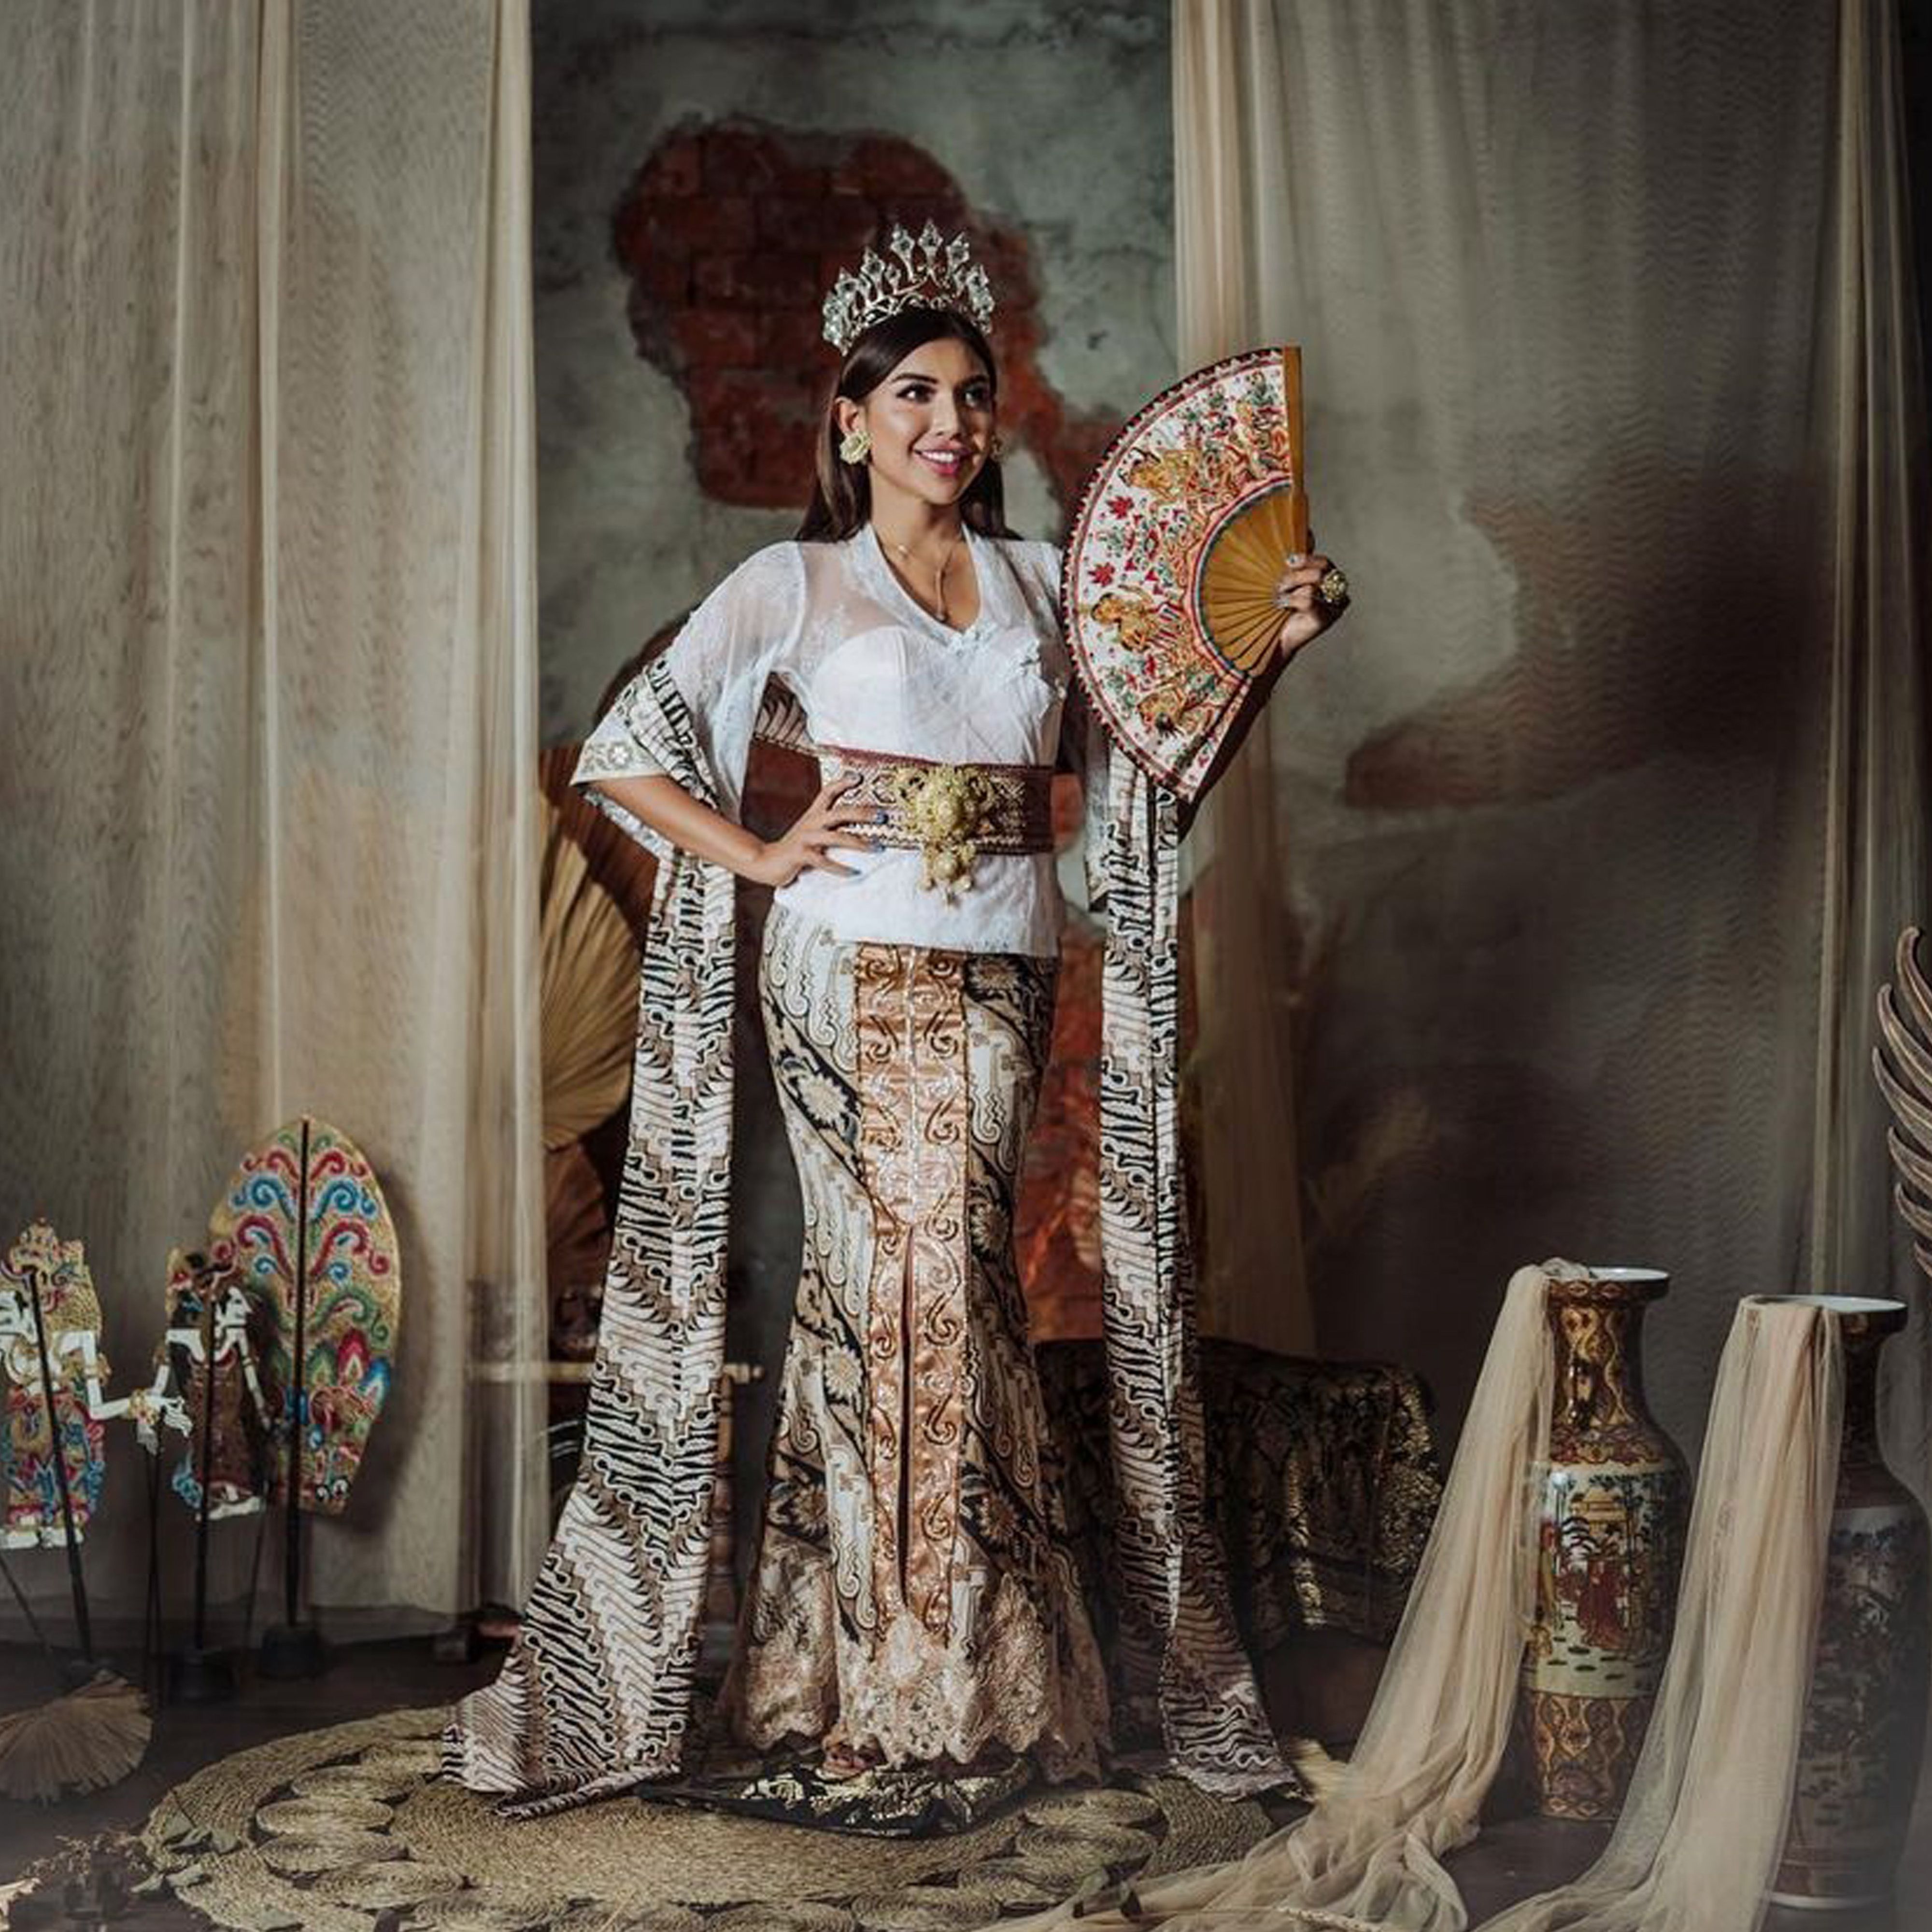 Millen Cyrus Pakai Baju Tradisional Bali